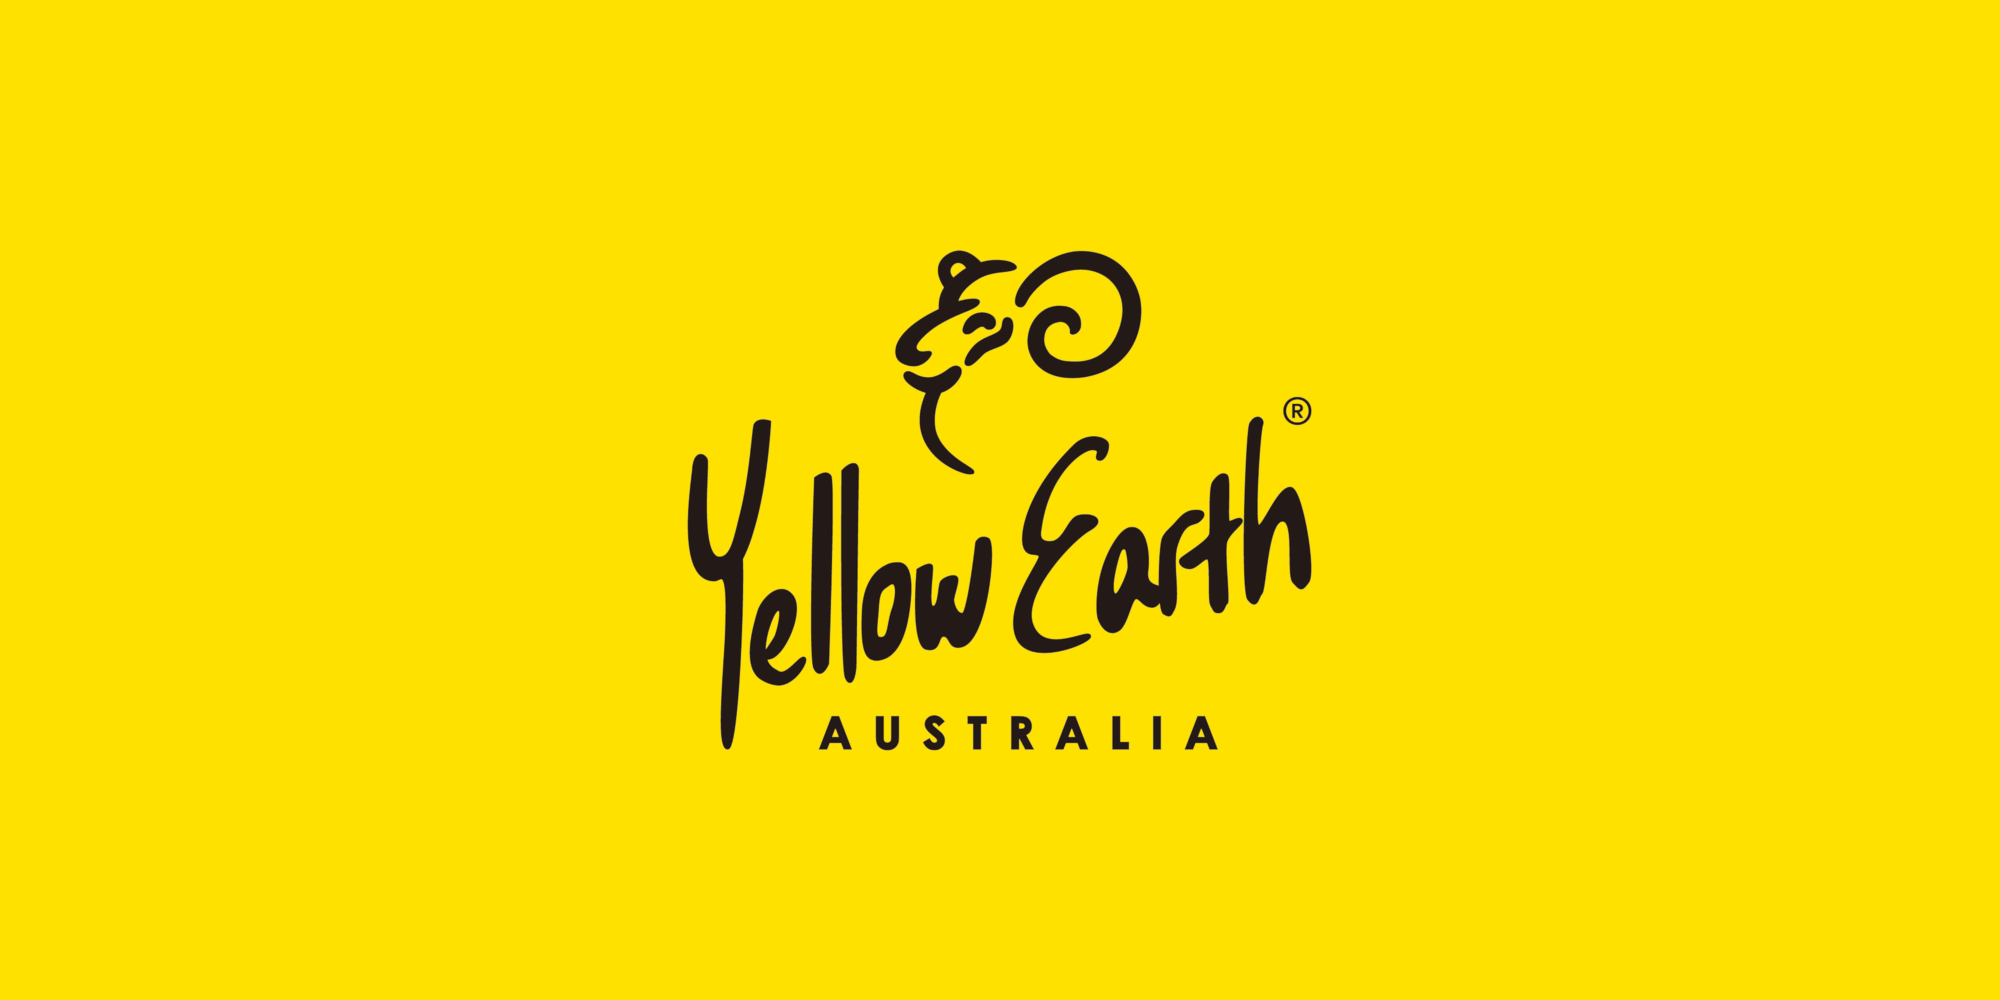 Yellow Earth Australia - International Store